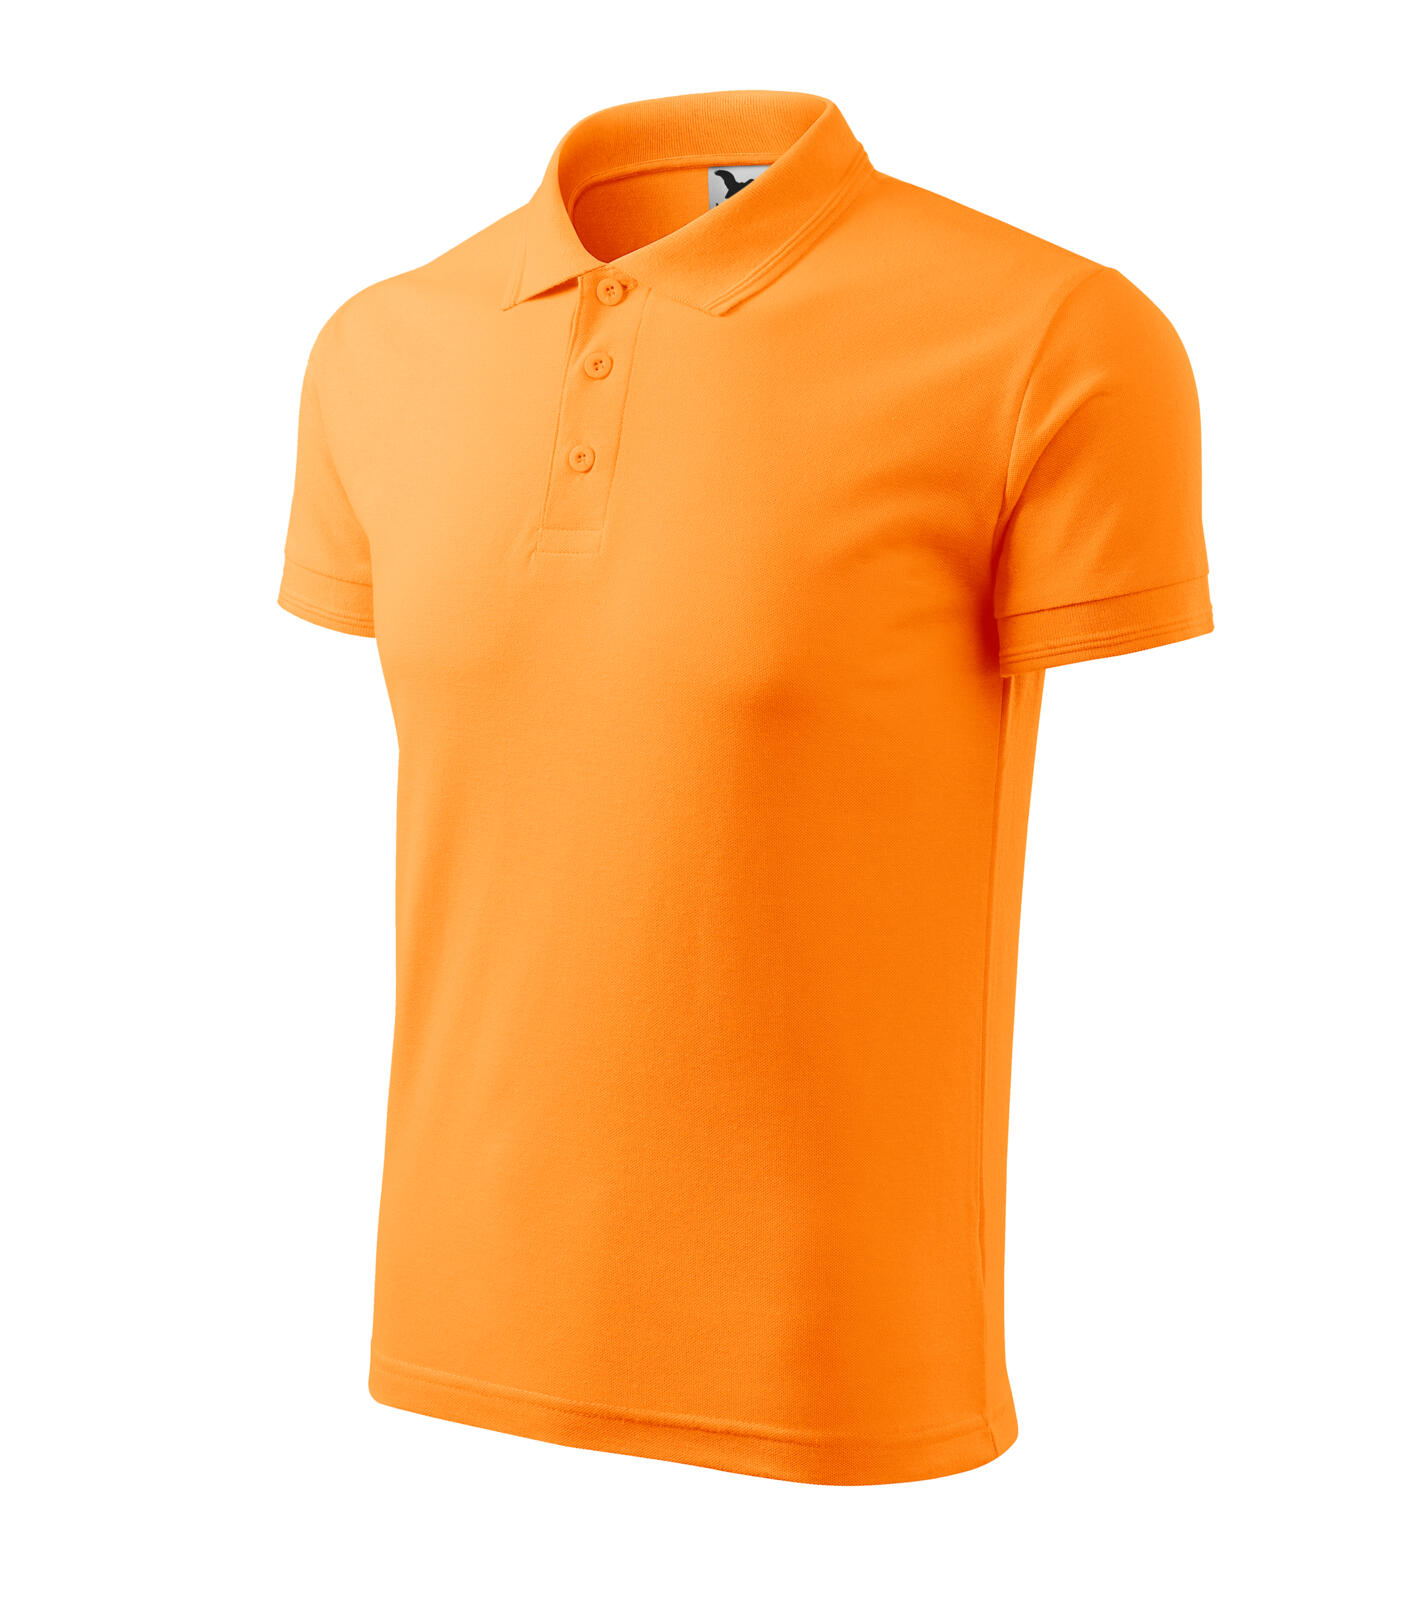 Pique Polo Polokošile pánská Barva: tangerine orange, Velikost: S